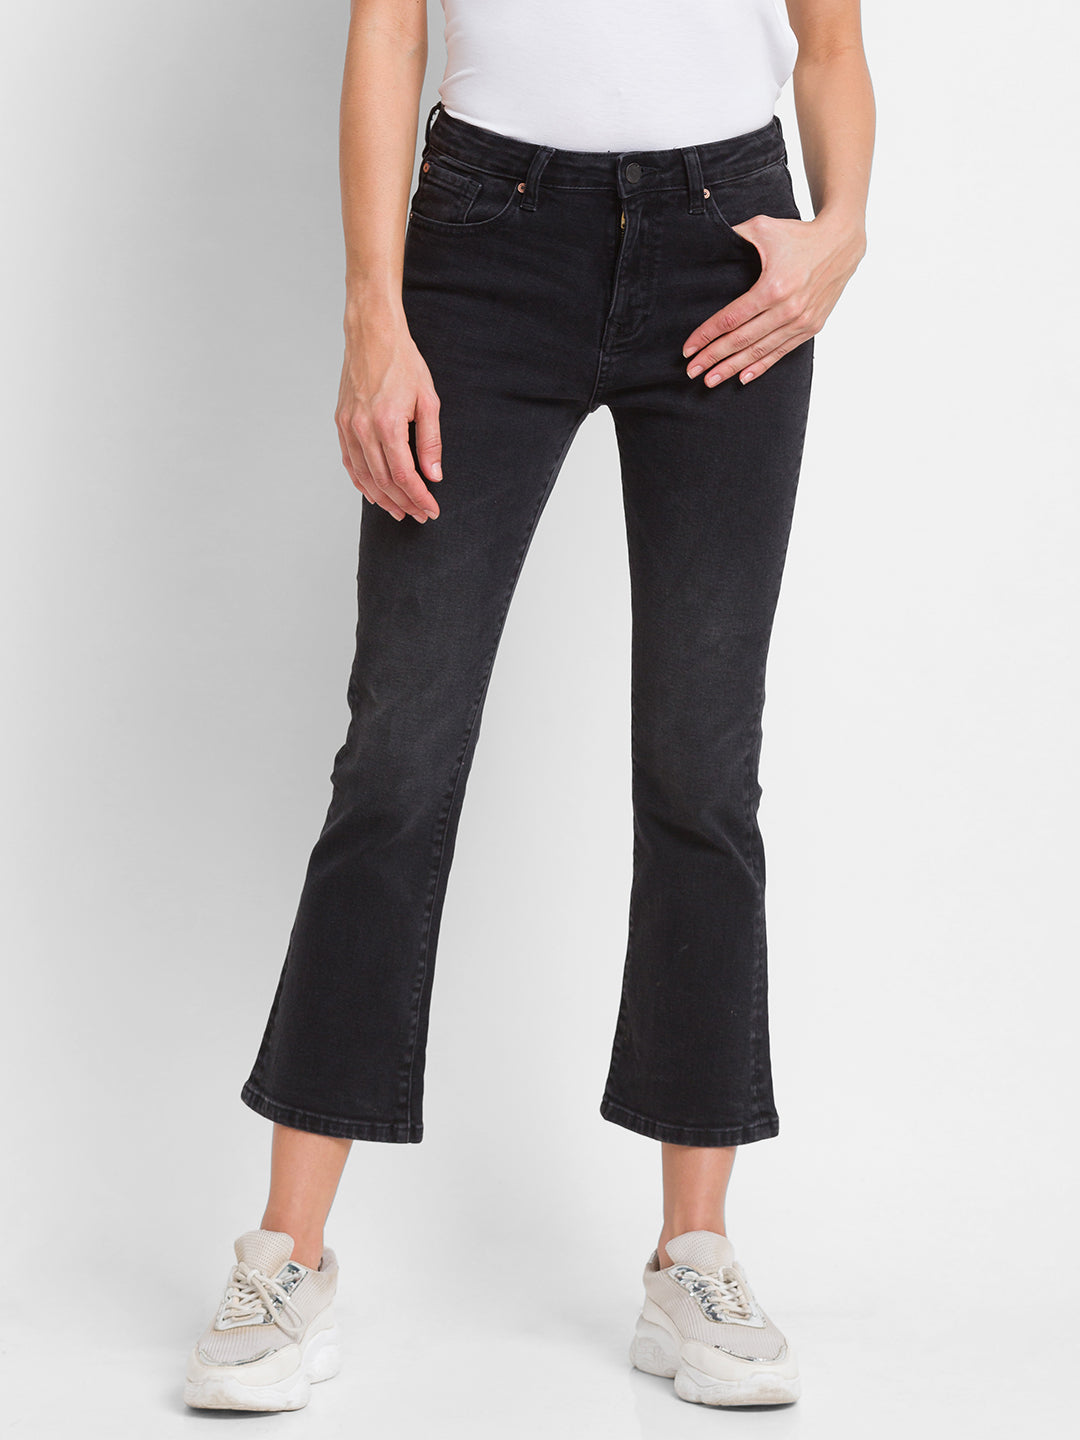 Spykar Black Lycra Flare Fit Ankle Length Jeans For Women (Elissa)